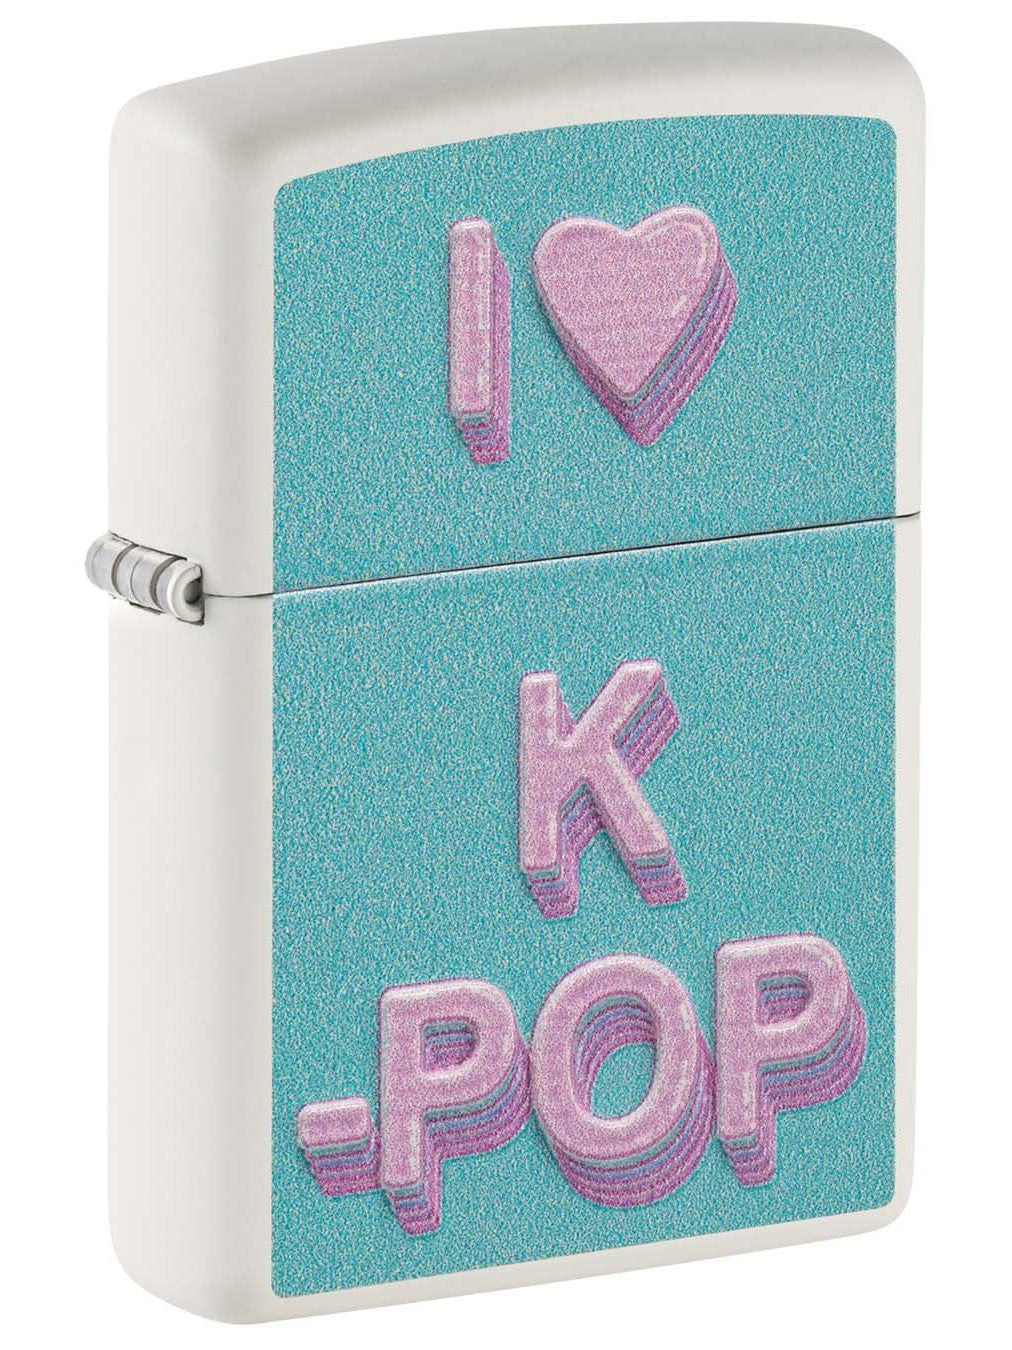 Zippo Lighter: I Love K Pop, Texture - White Matte 48542